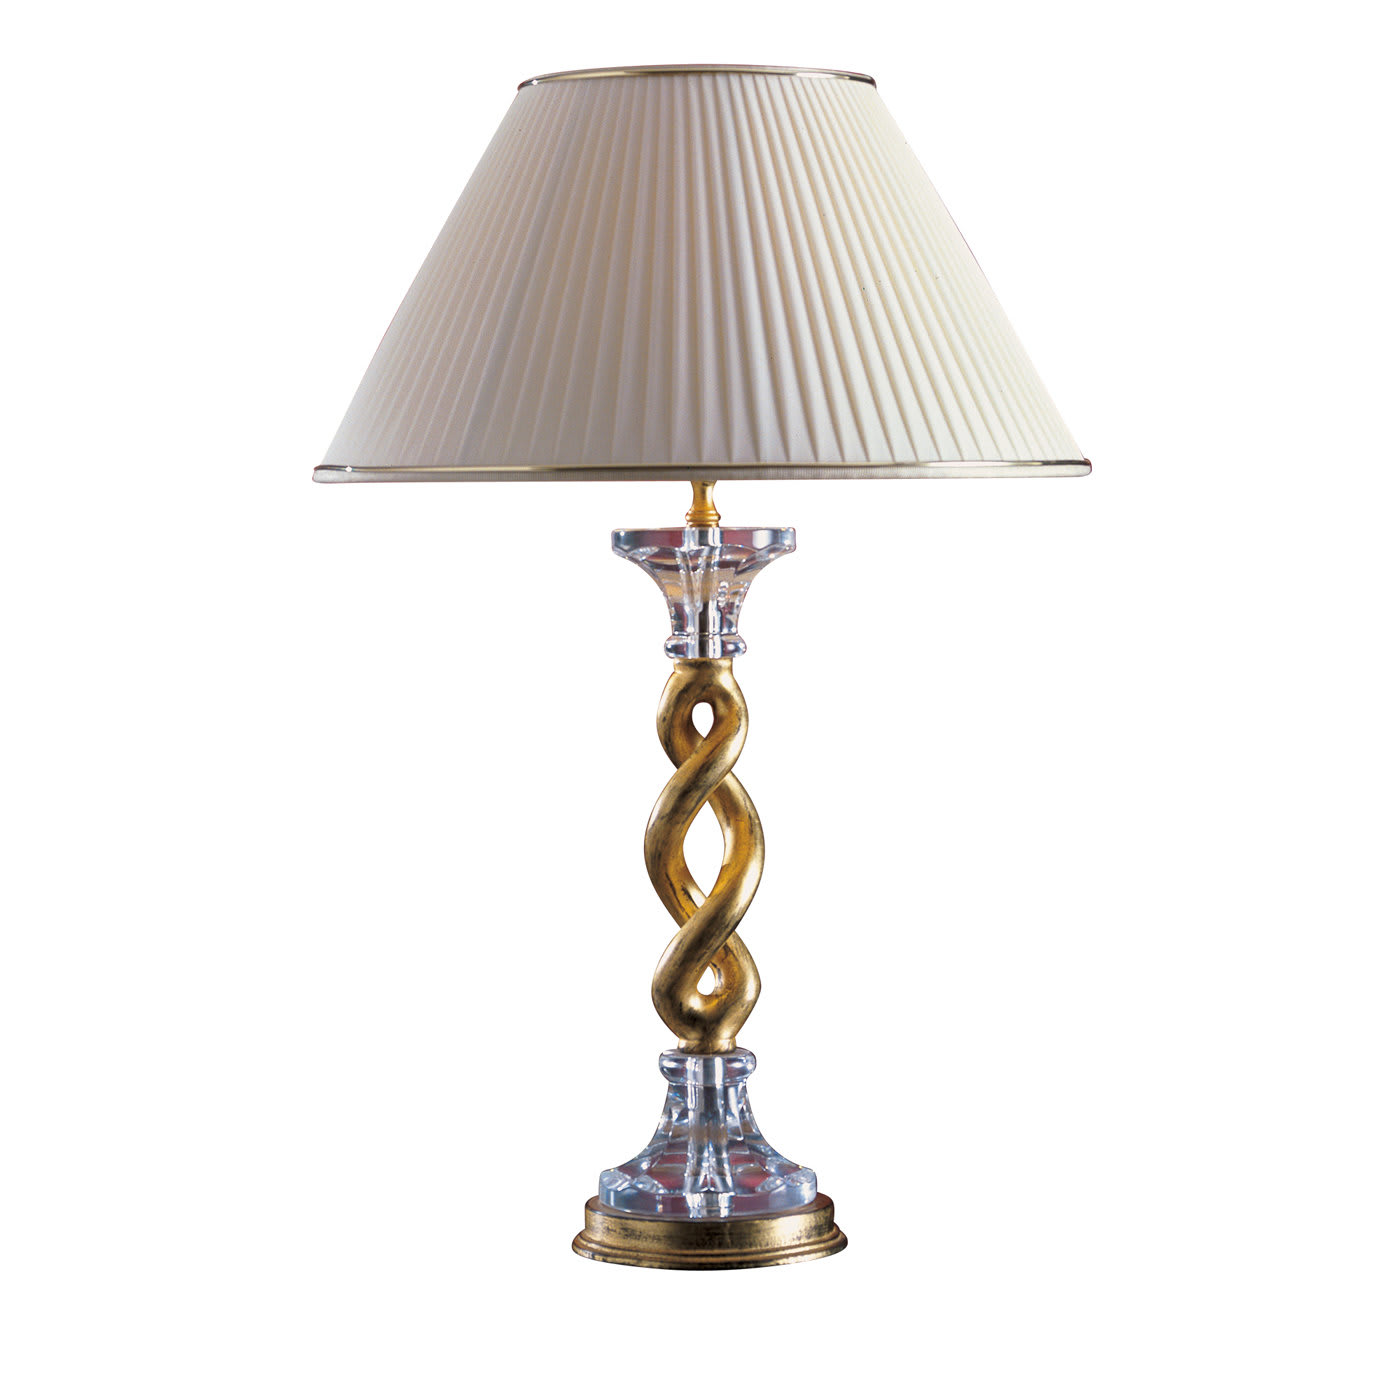 Twisted Table Lamp - Banci